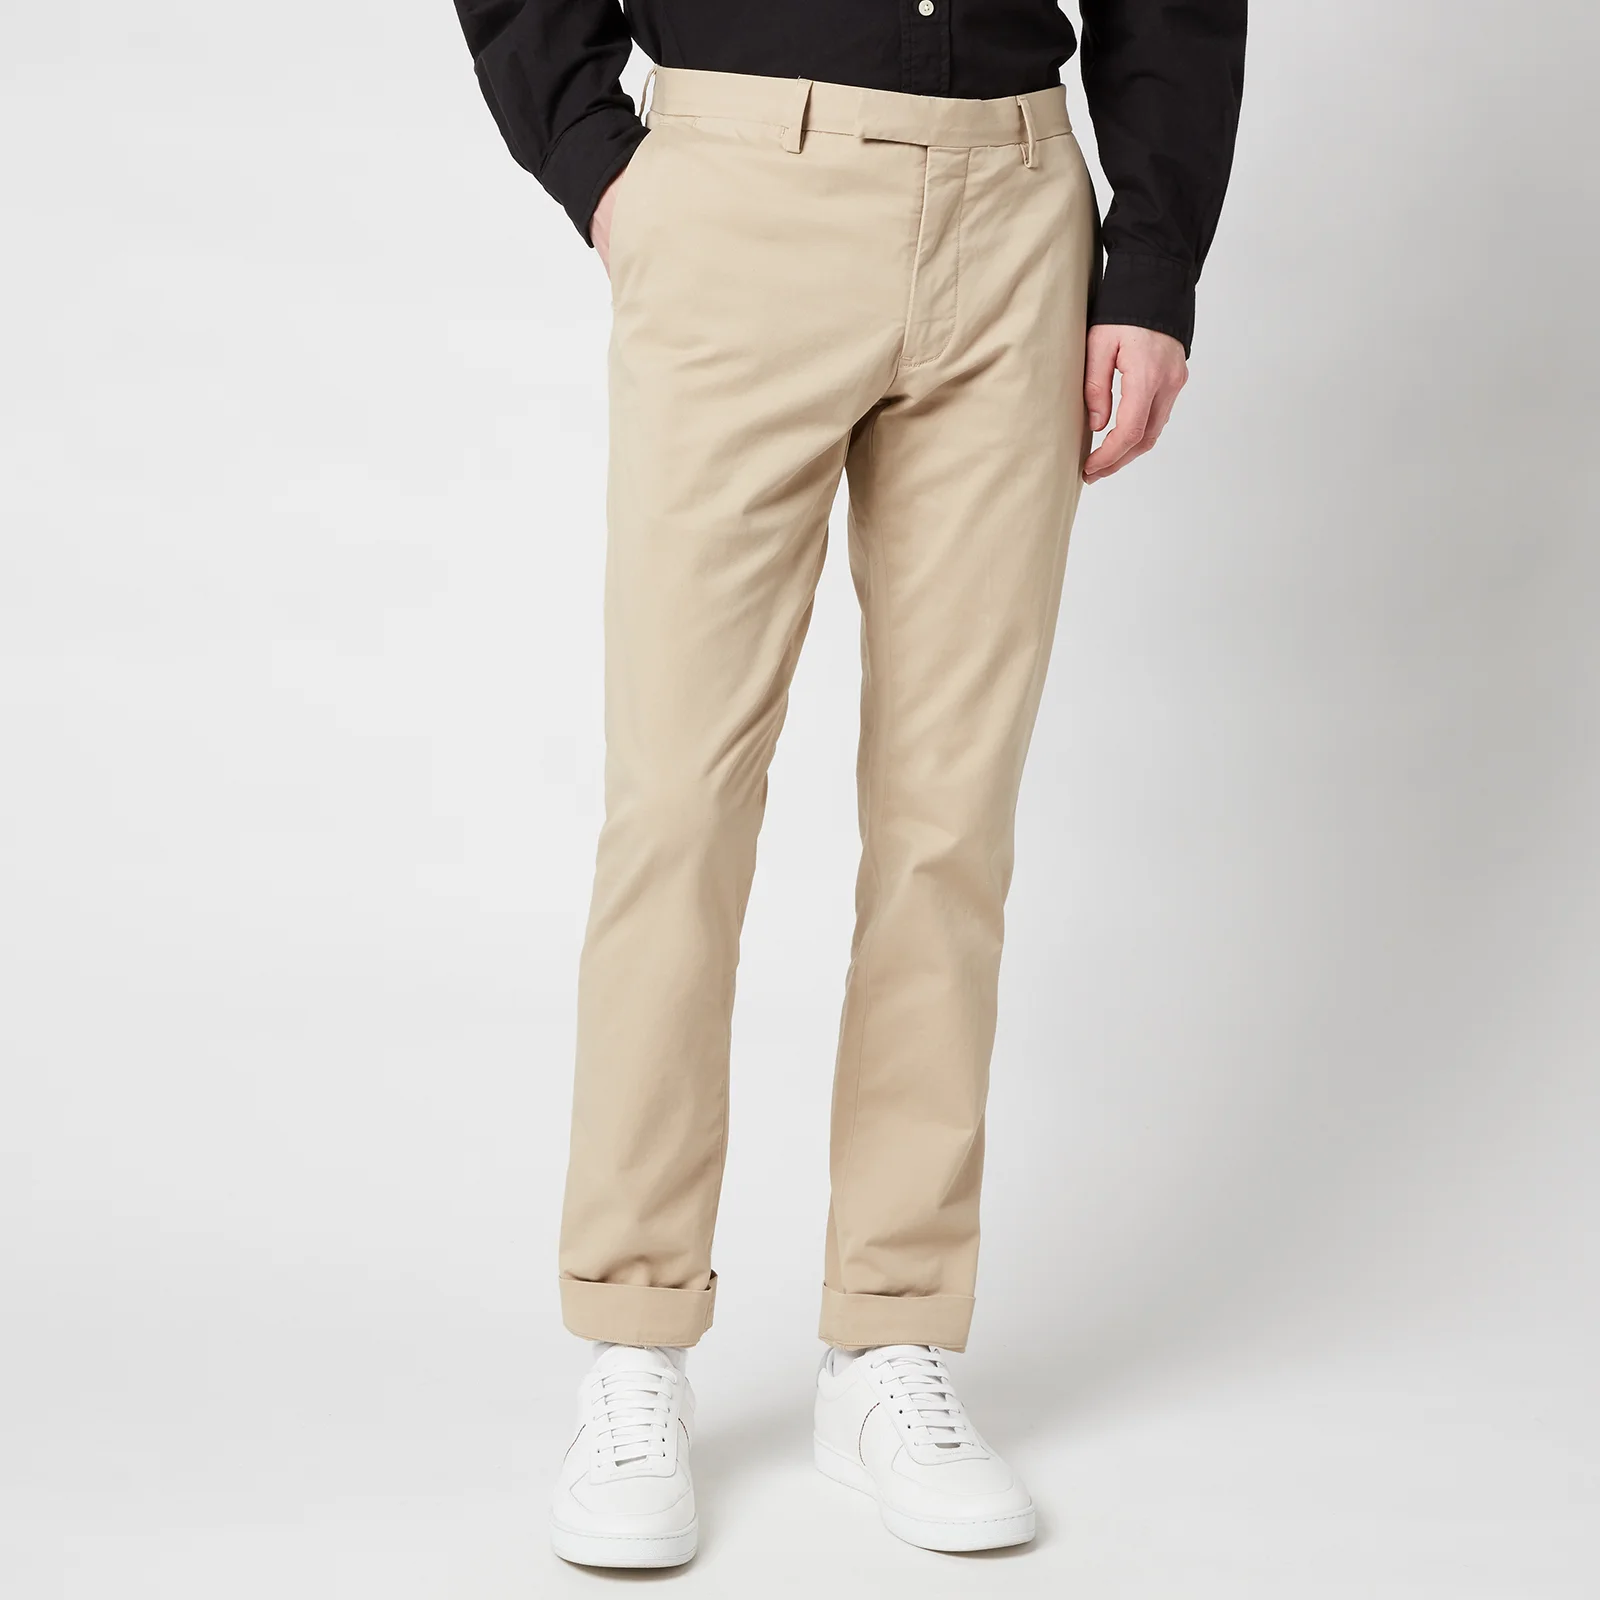 Polo Ralph Lauren Men's Stretch Slim Fit Chino Trousers - Classic Khaki Image 1